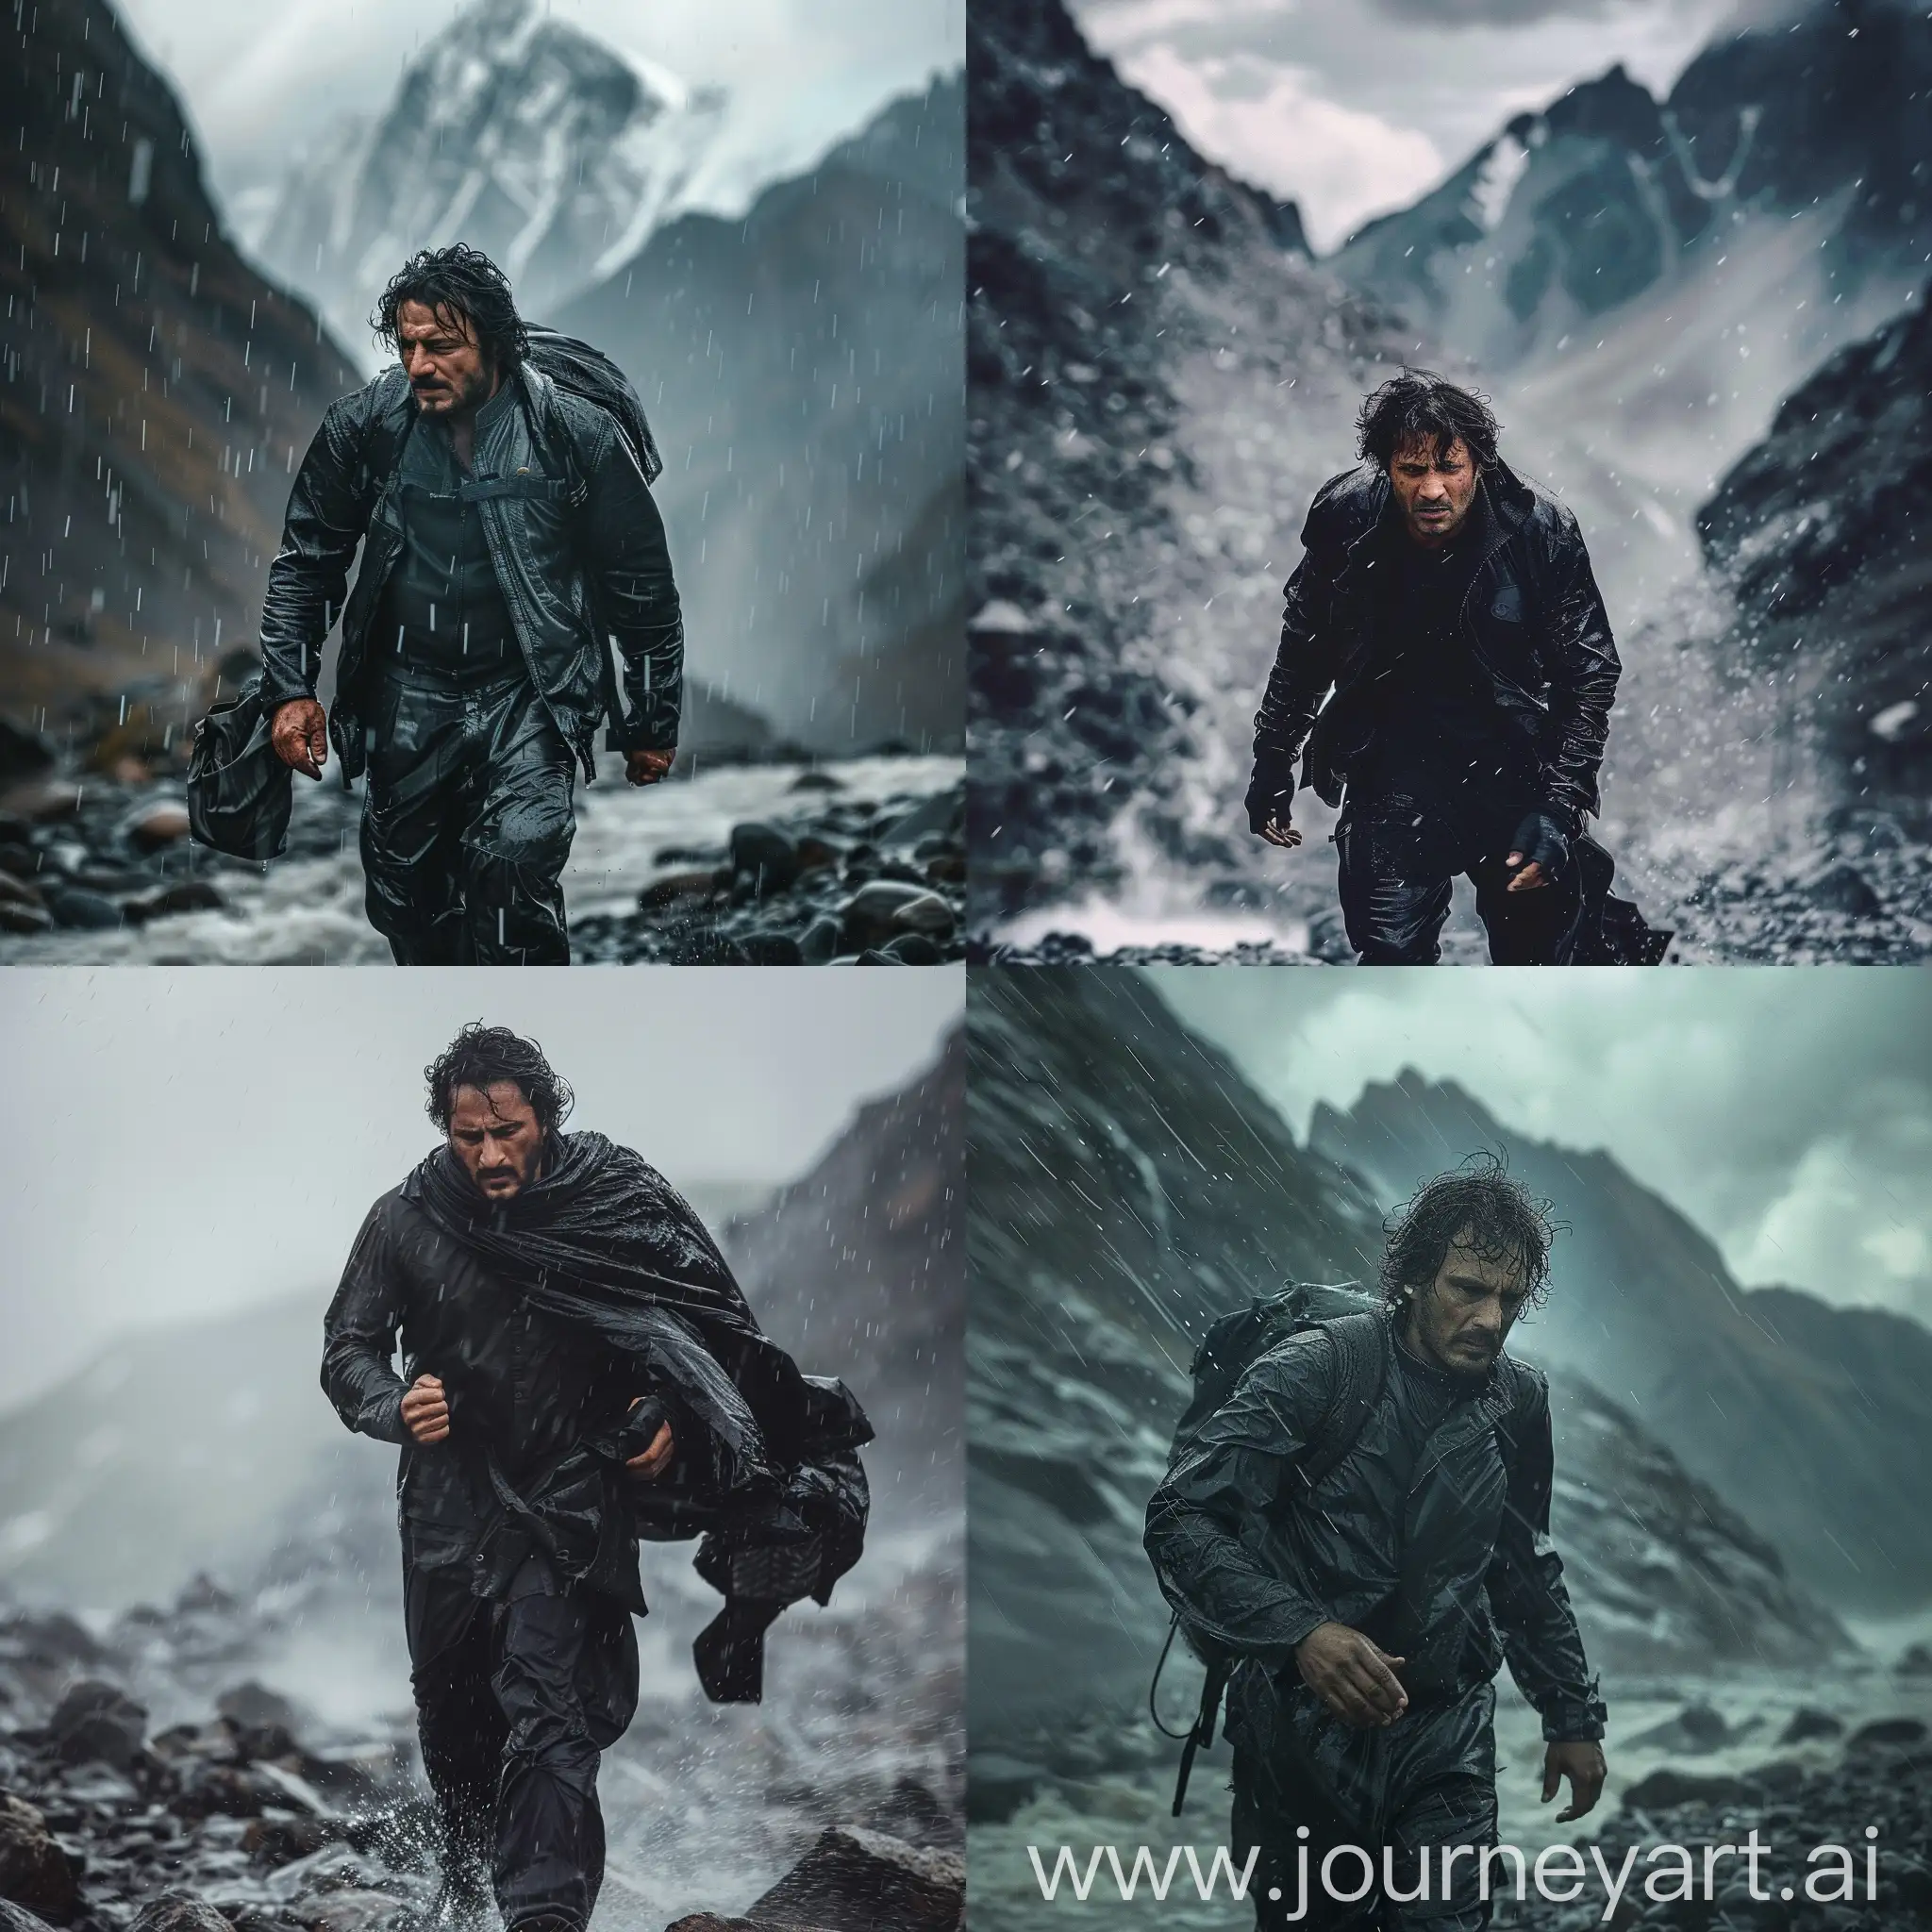 Imran-Khan-Battling-Stormy-Mountains-Courageous-Journey